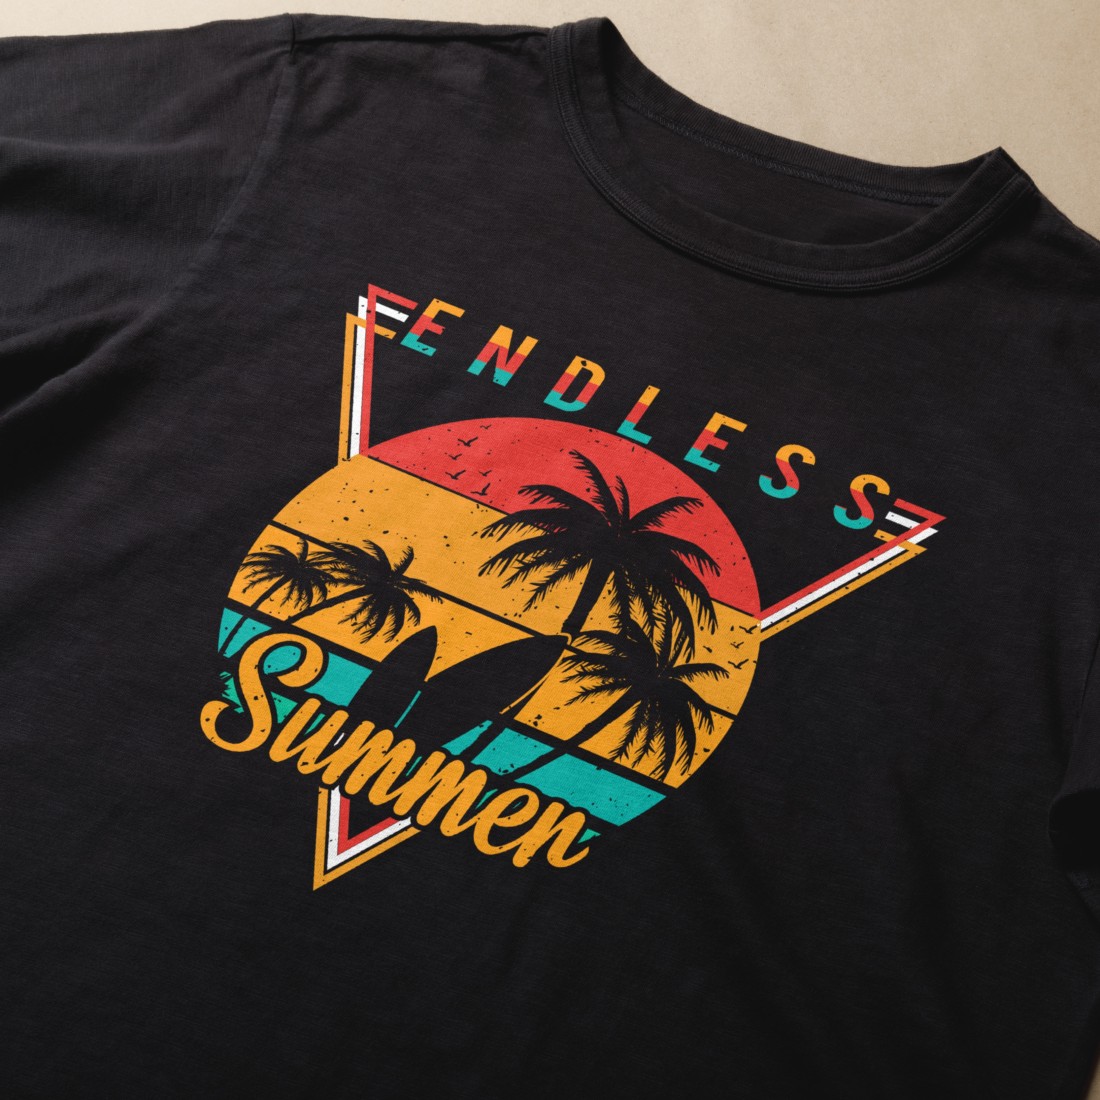 Endless Summer T-shirt Design preview image.